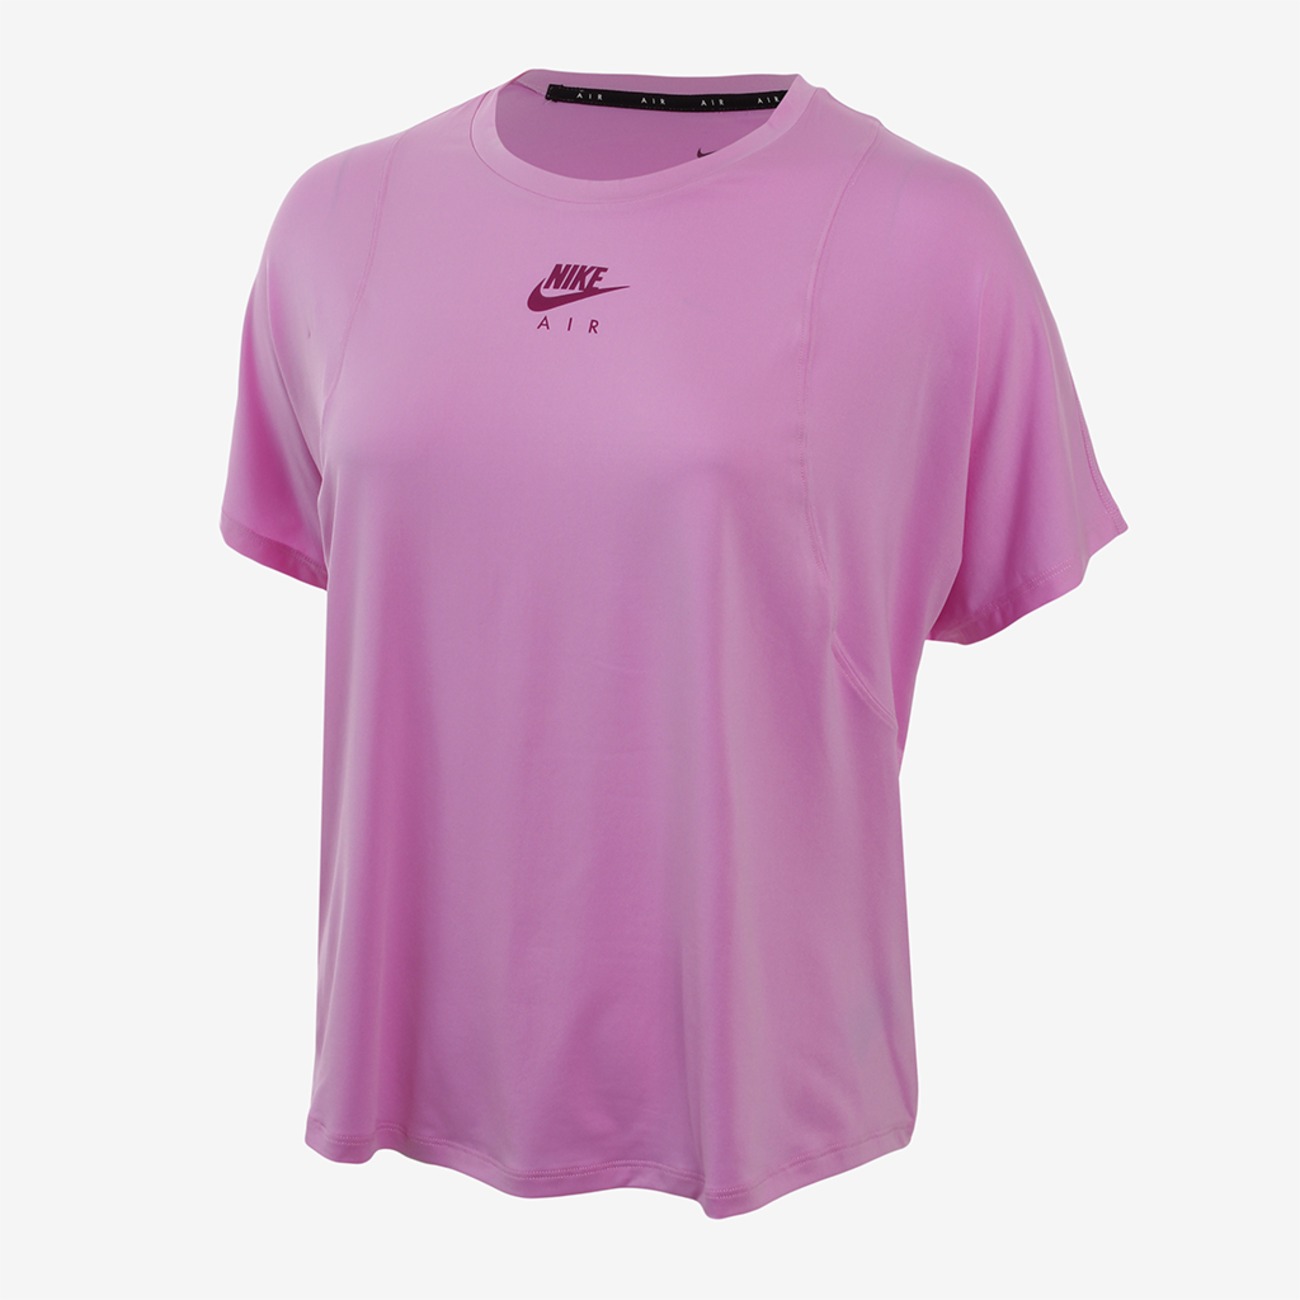 Plus Size - Camiseta Nike Air Feminina